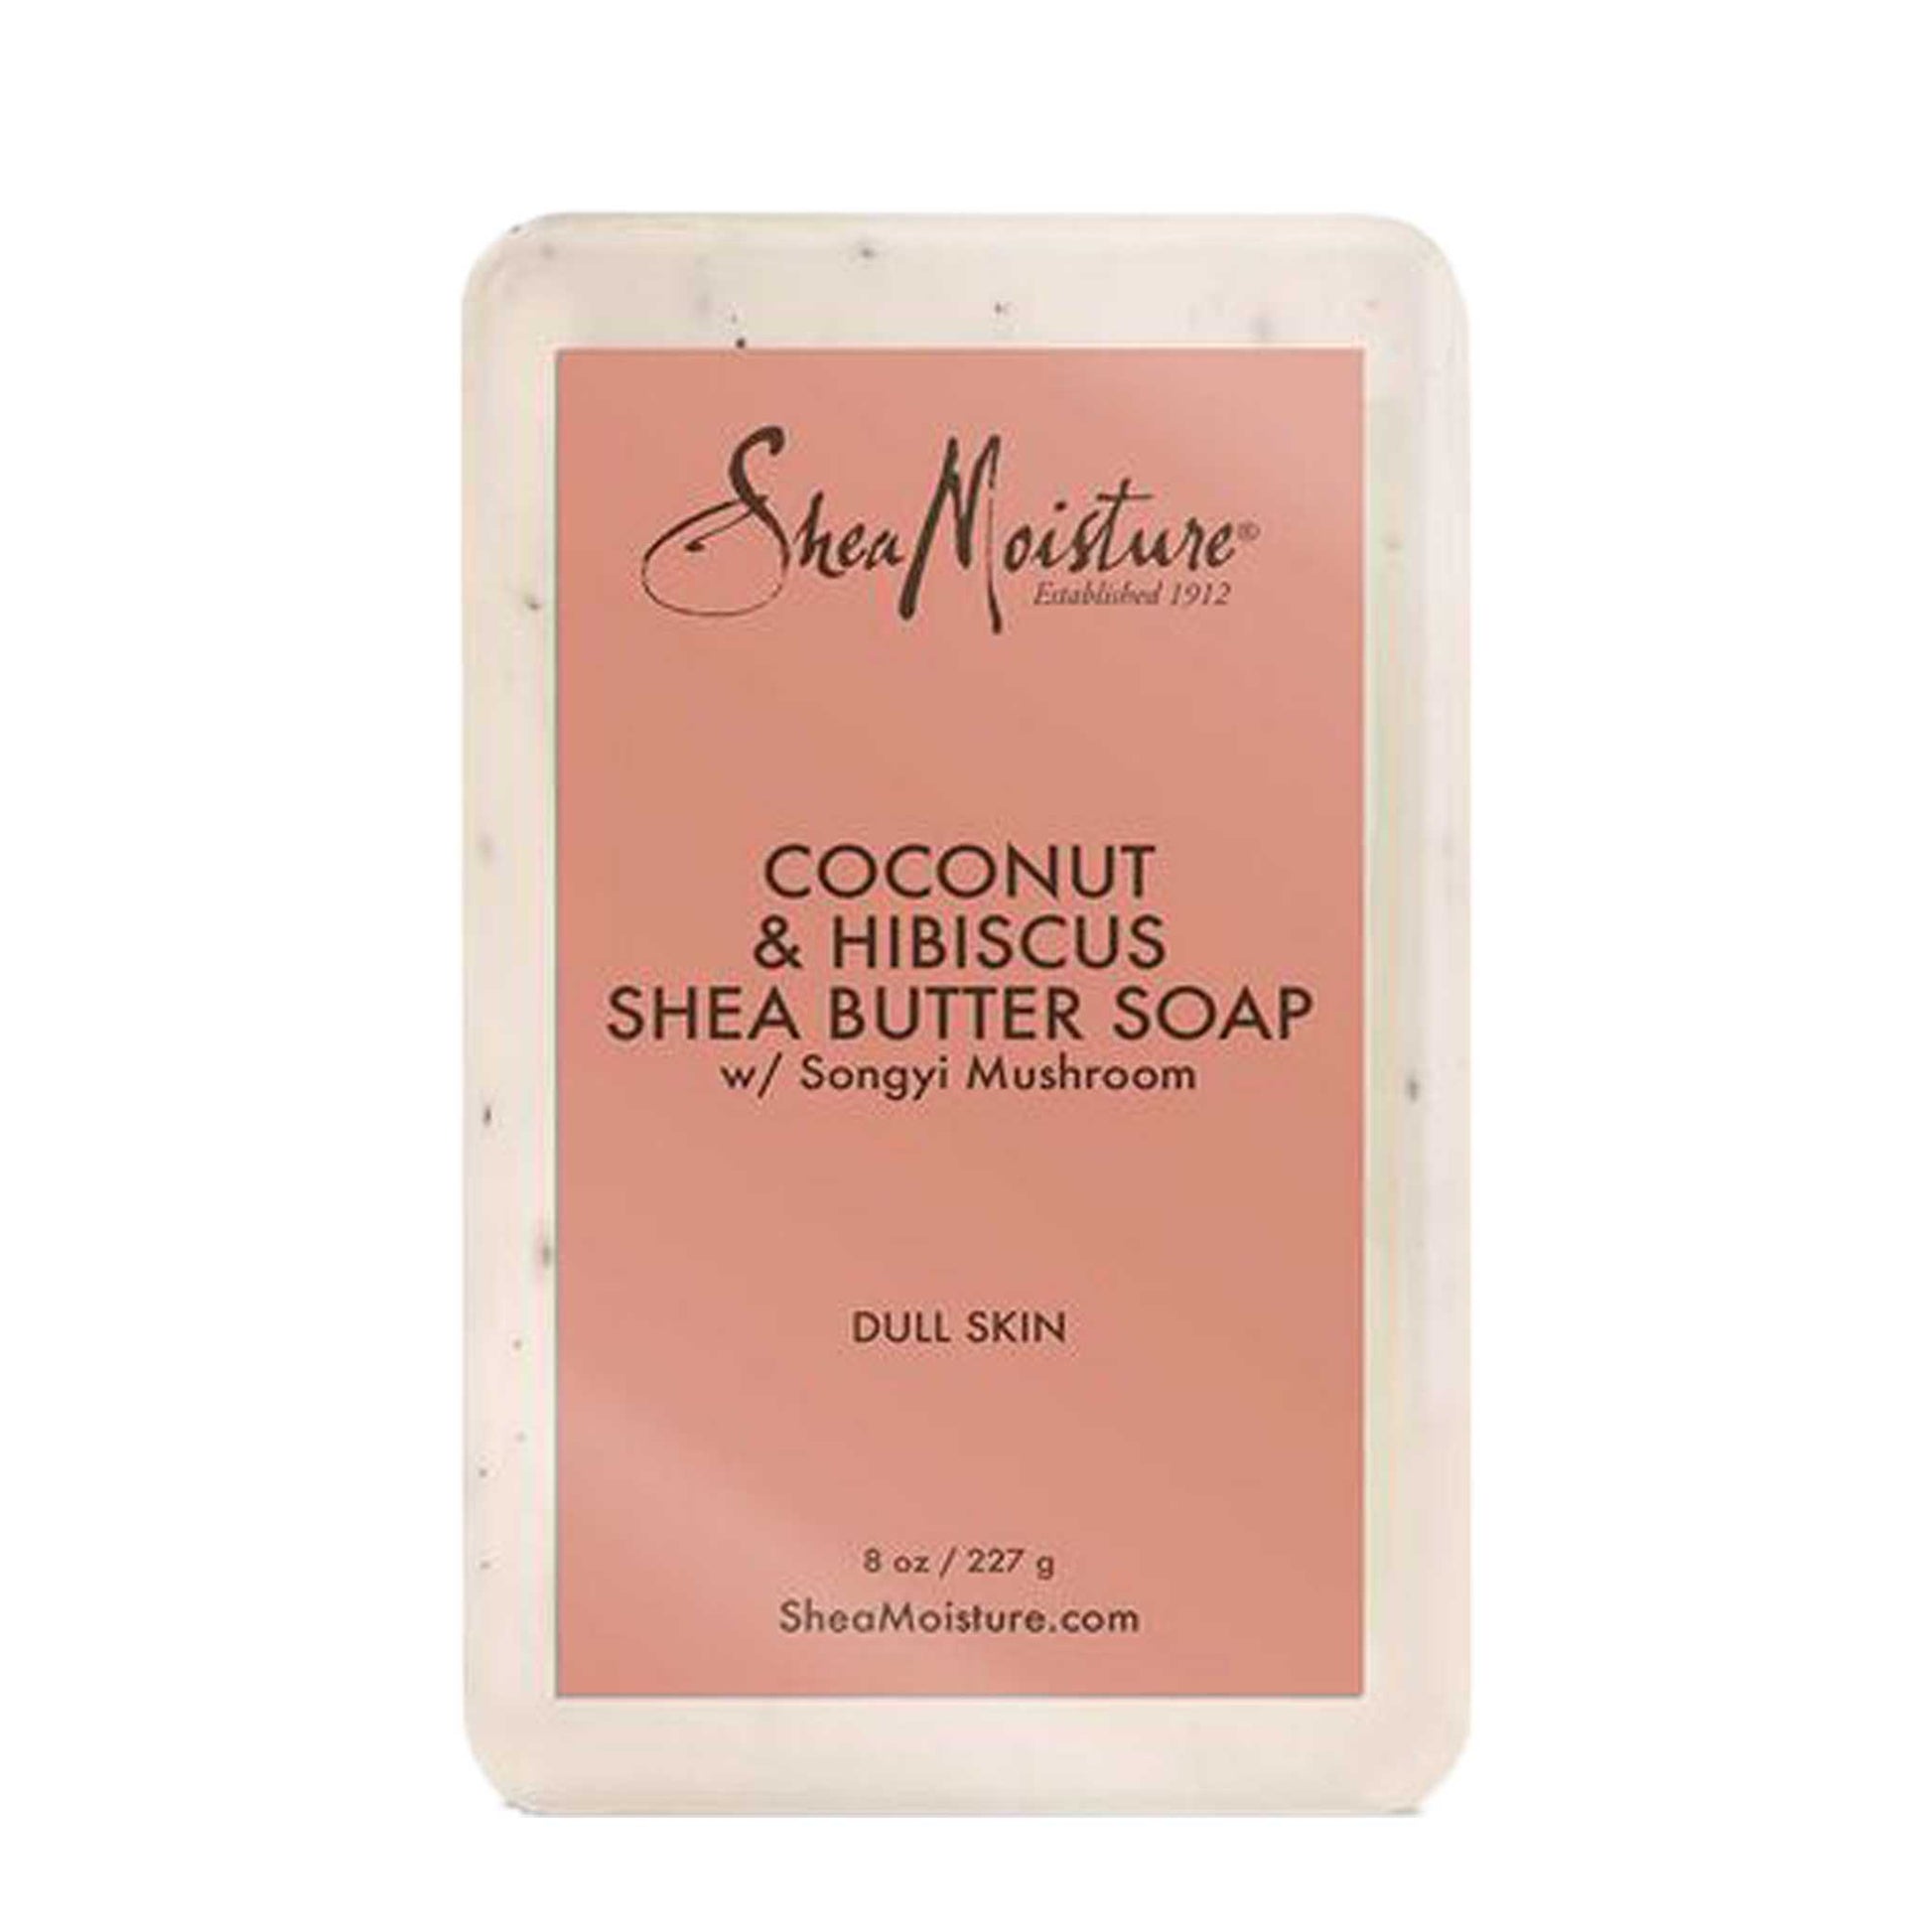 SHEAMOISTURE COCONUT & HIBISCUS SHEA BUTTER SOAP SheaMoisture